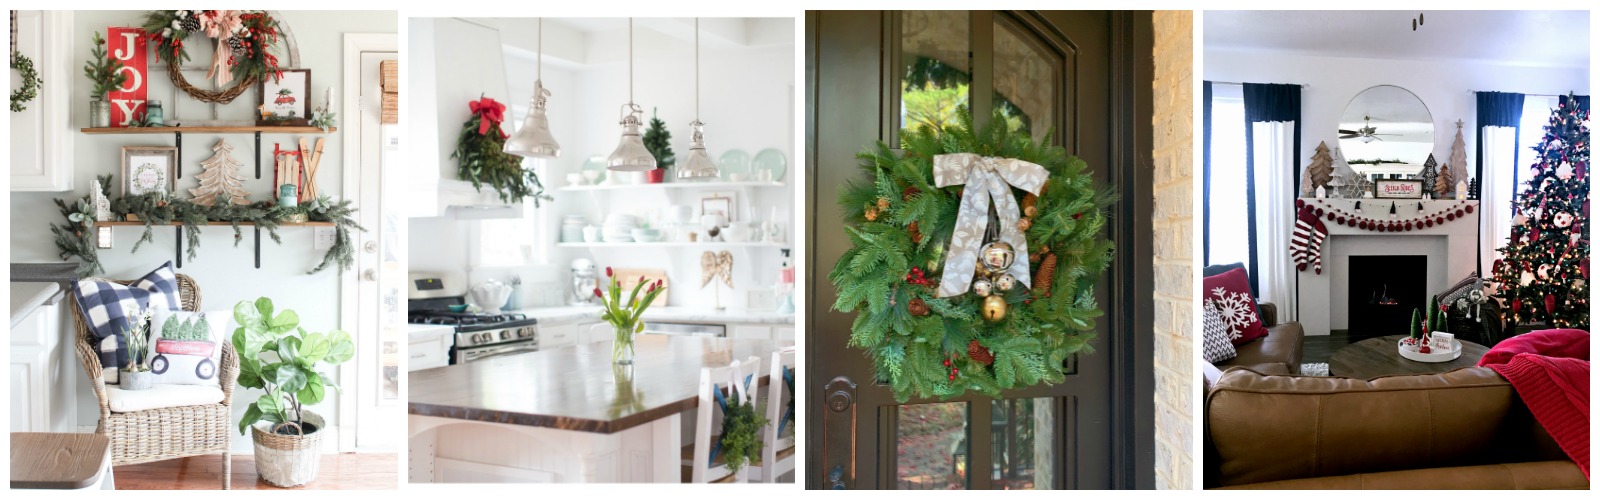 Christmas decor ideas from bloggers- Maison de Pax